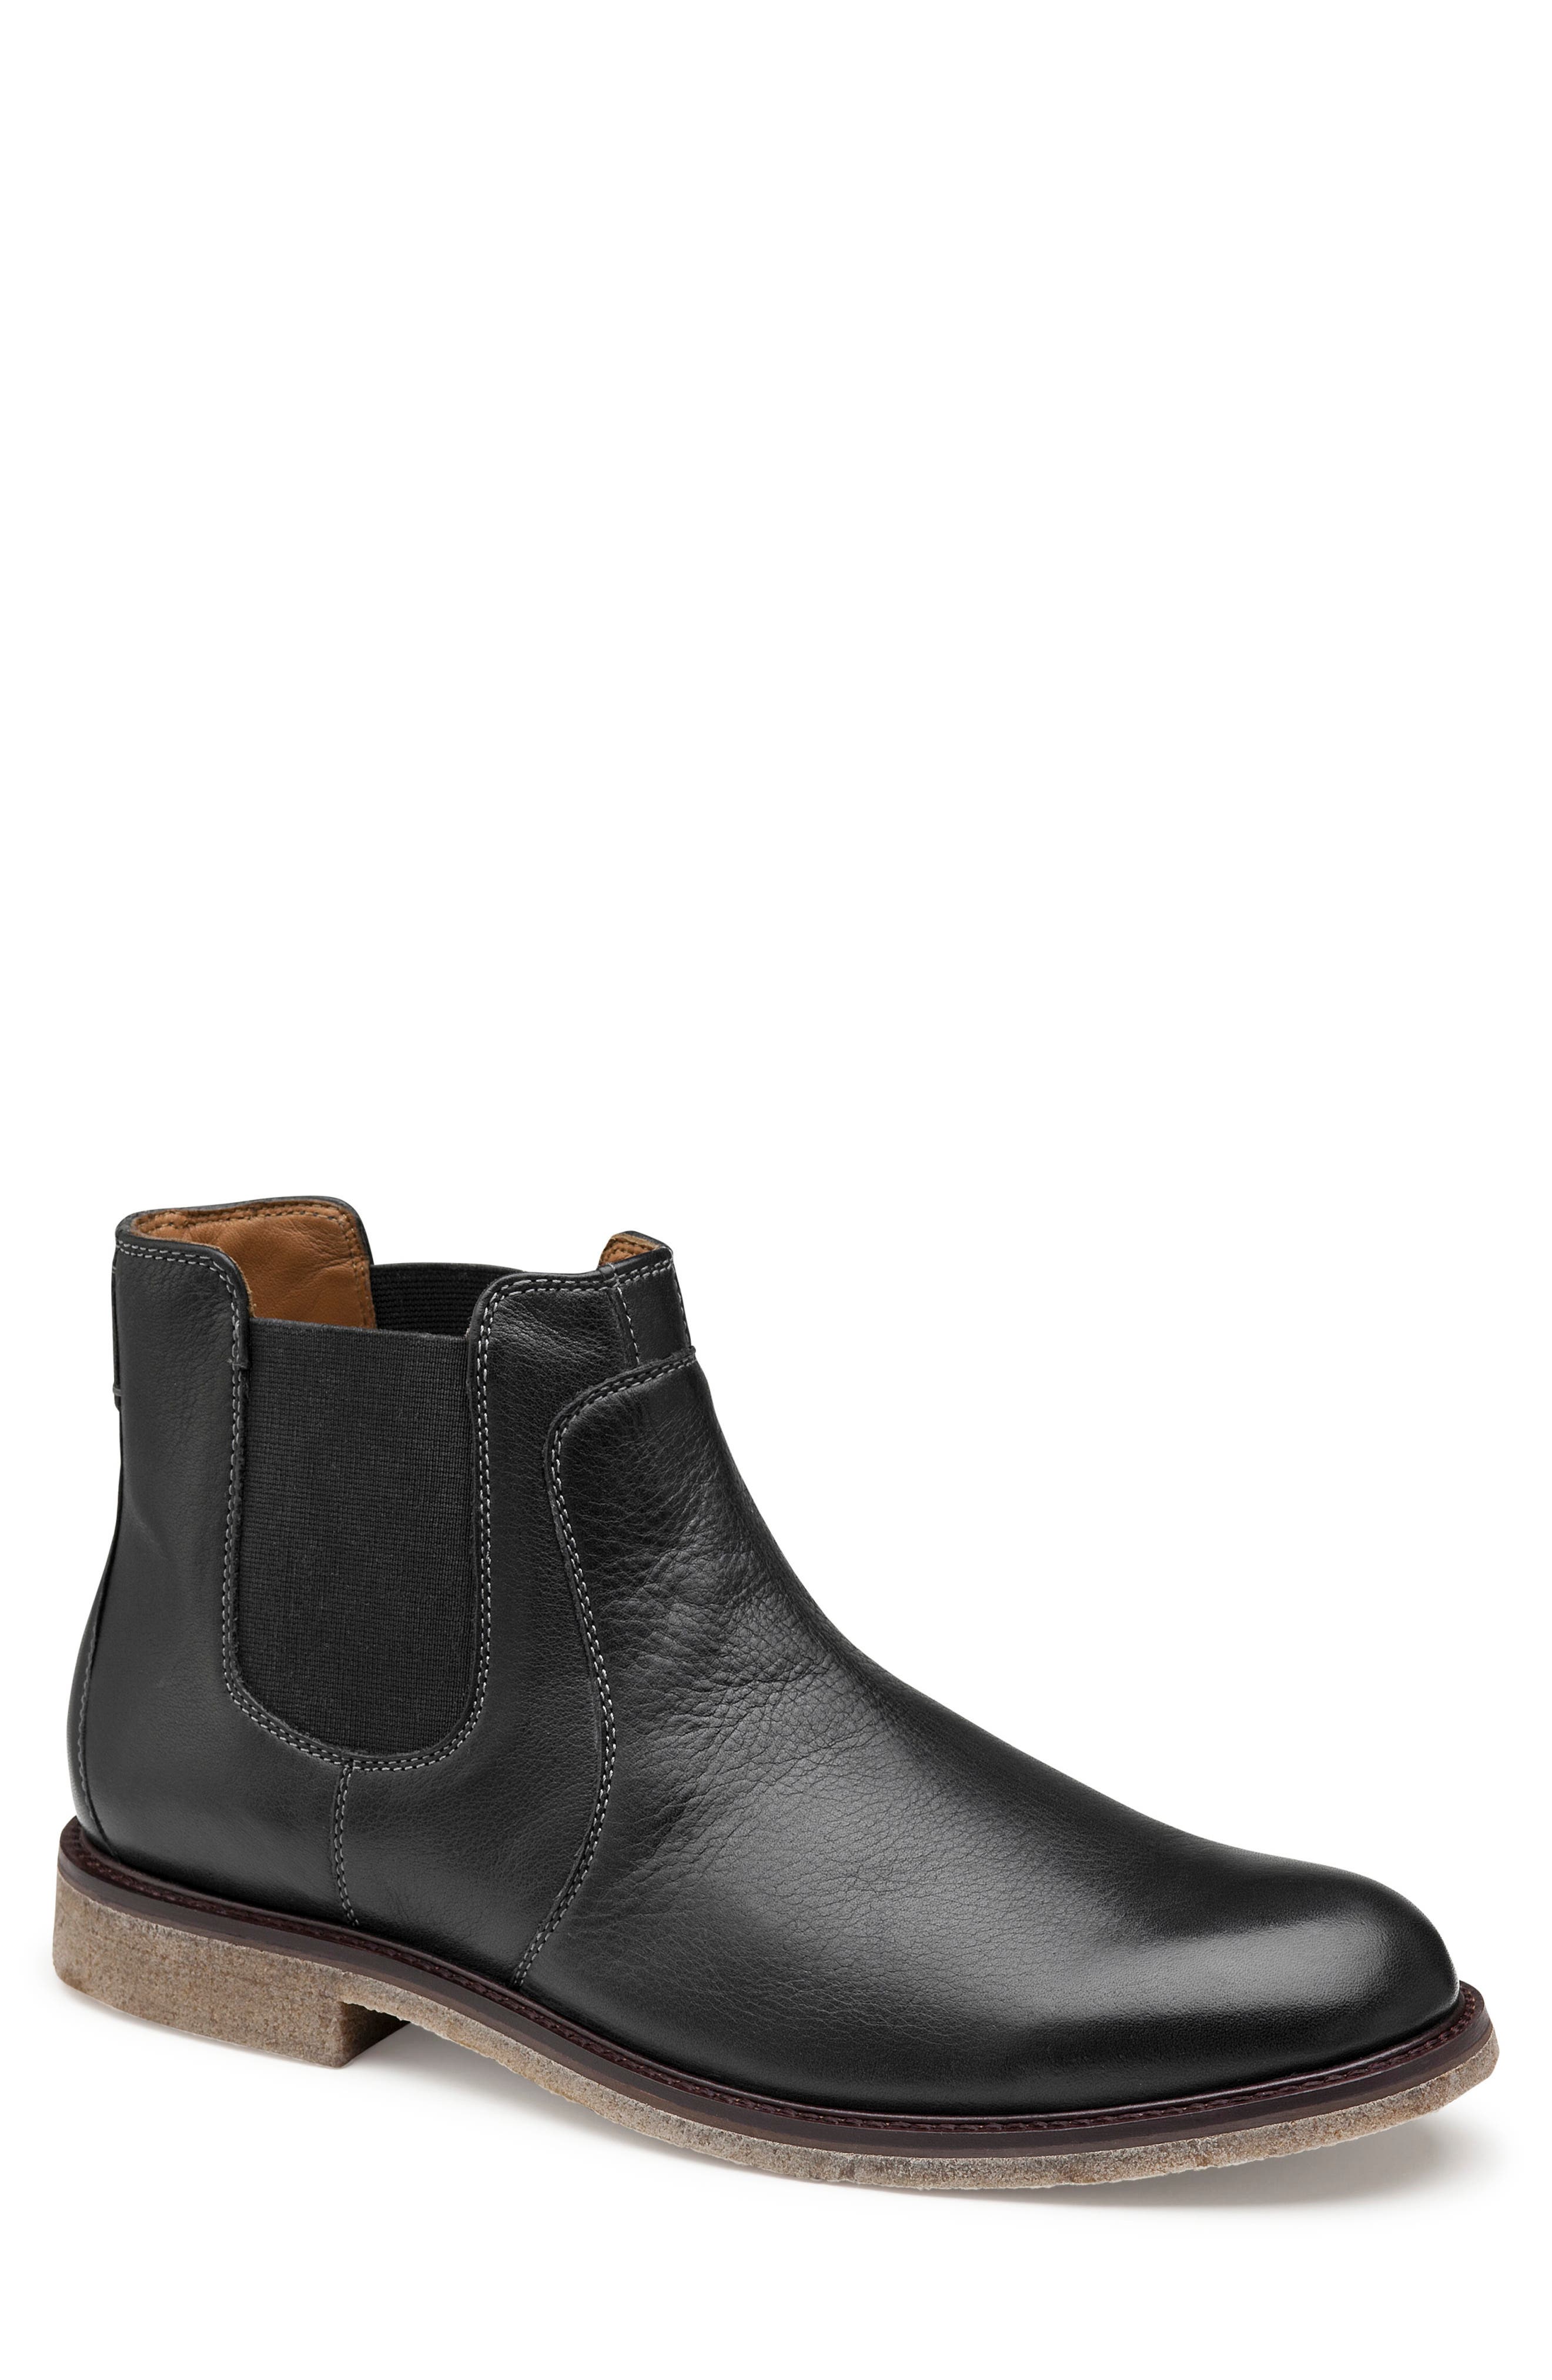 592581 MS50 Men's Shoes Size 12 M Black Leather Lace Up Johnston & Murphy